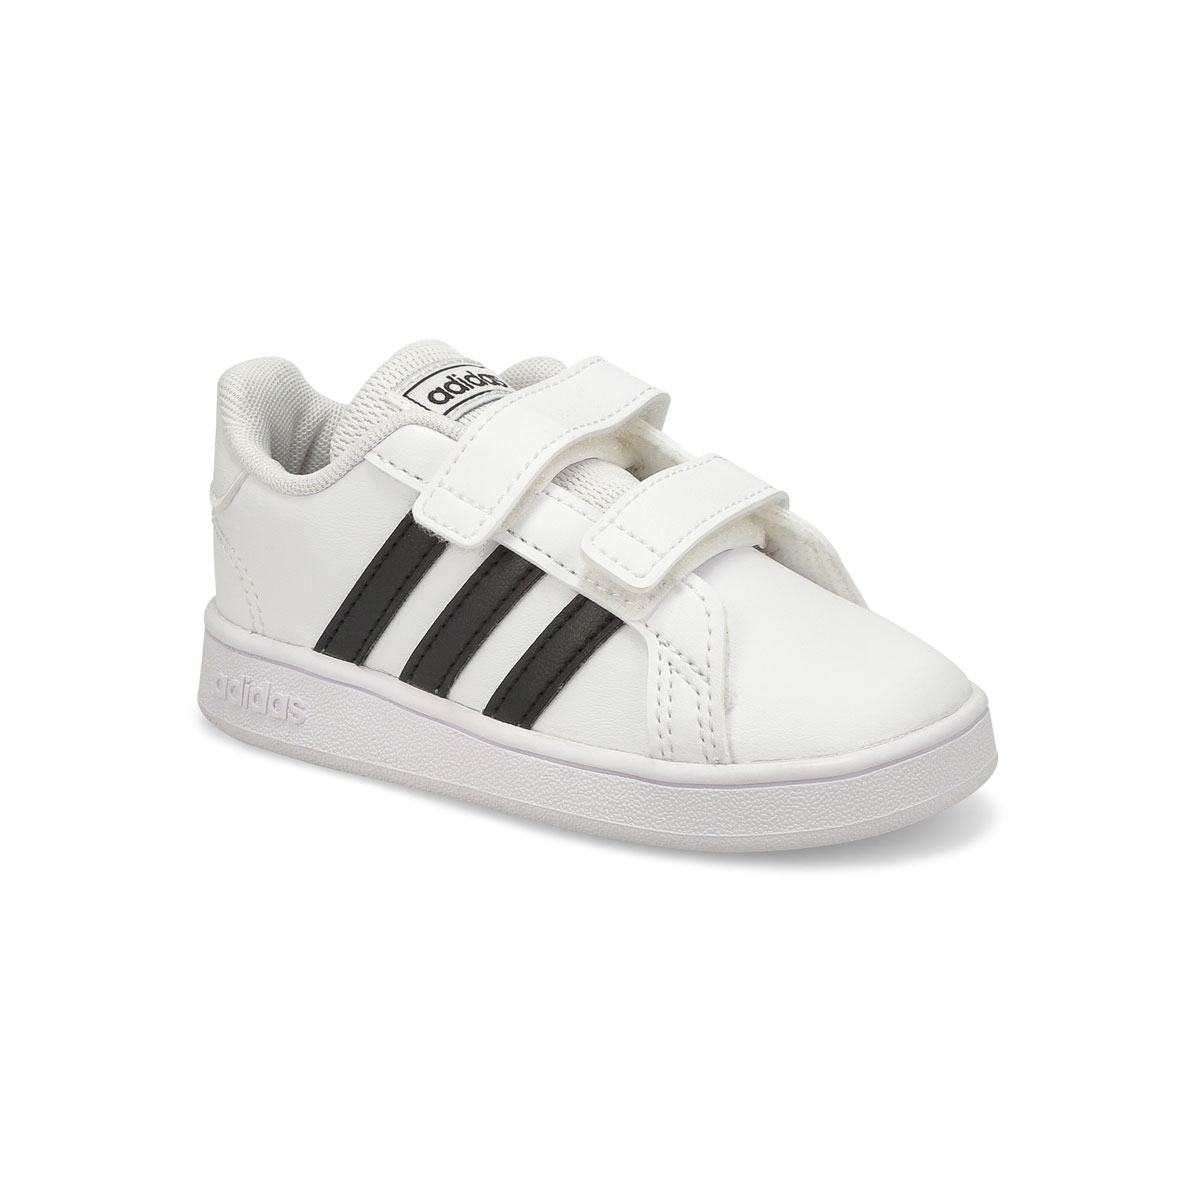 black and white adidas toddler